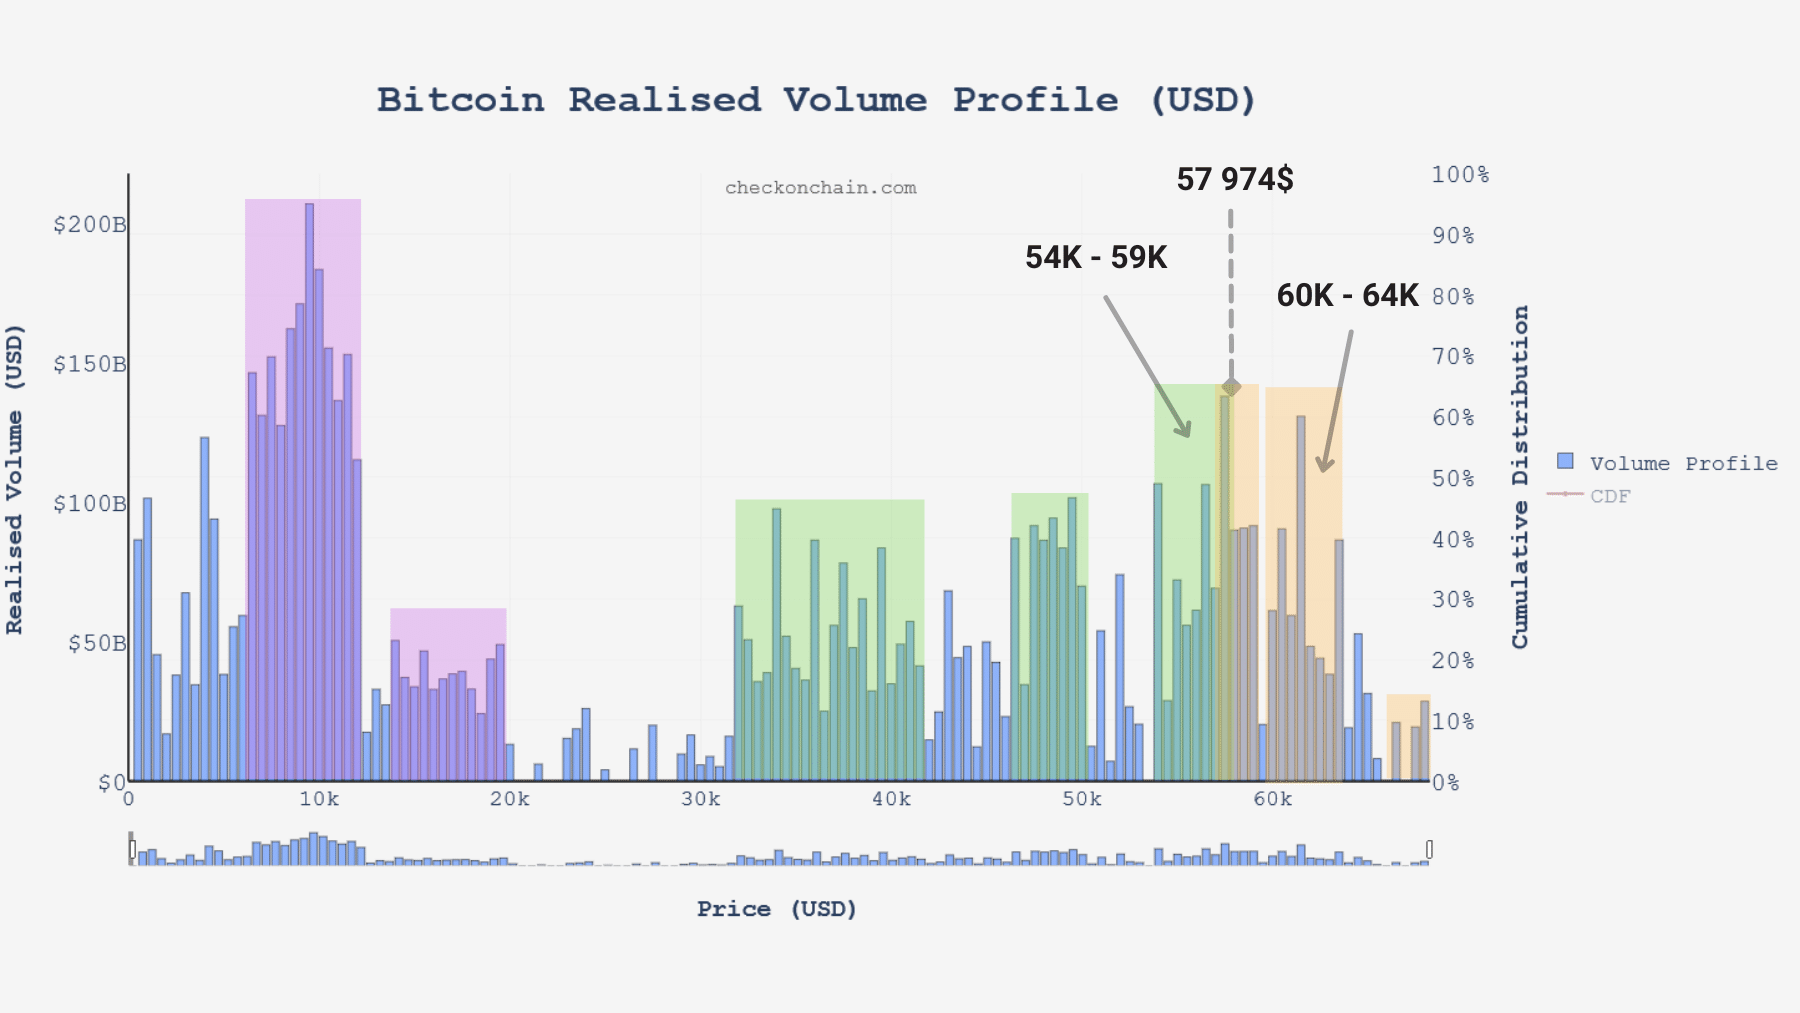 Graph of realized bitcoin (BTC) volume (Fonte: checkonchain.com)